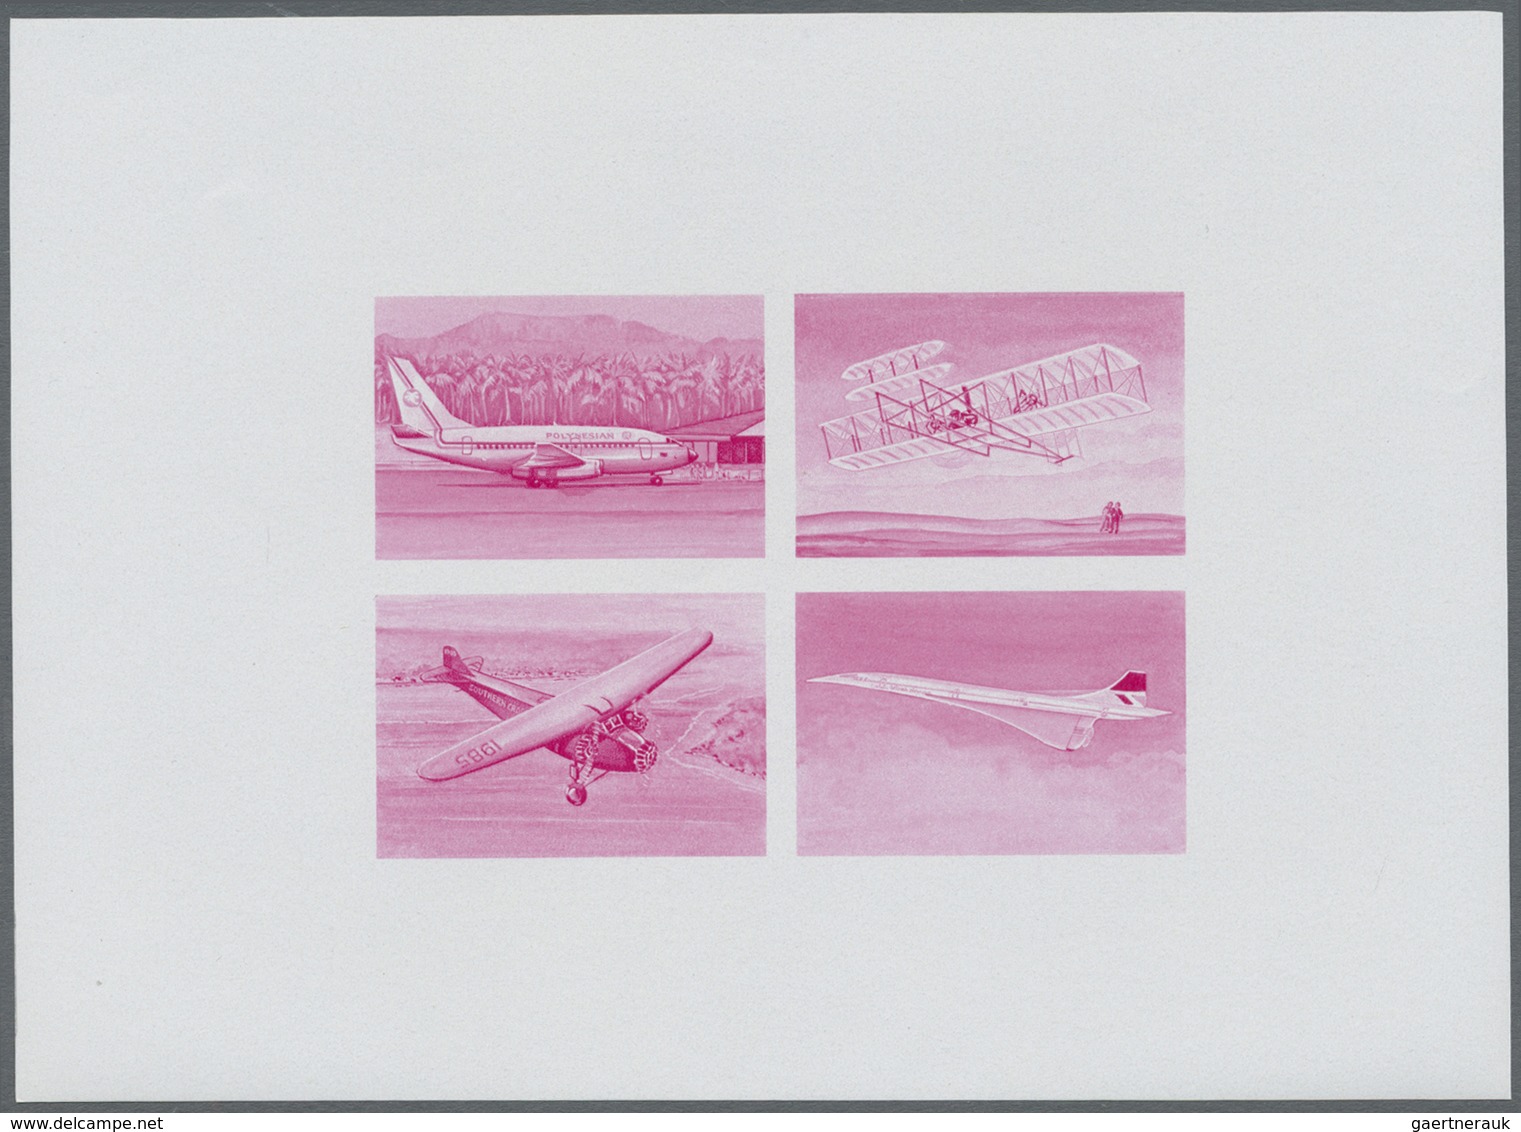 ** Thematik: Flugzeuge, Luftfahrt / airoplanes, aviation: 1978, SAMOA: progress in aviation miniature s